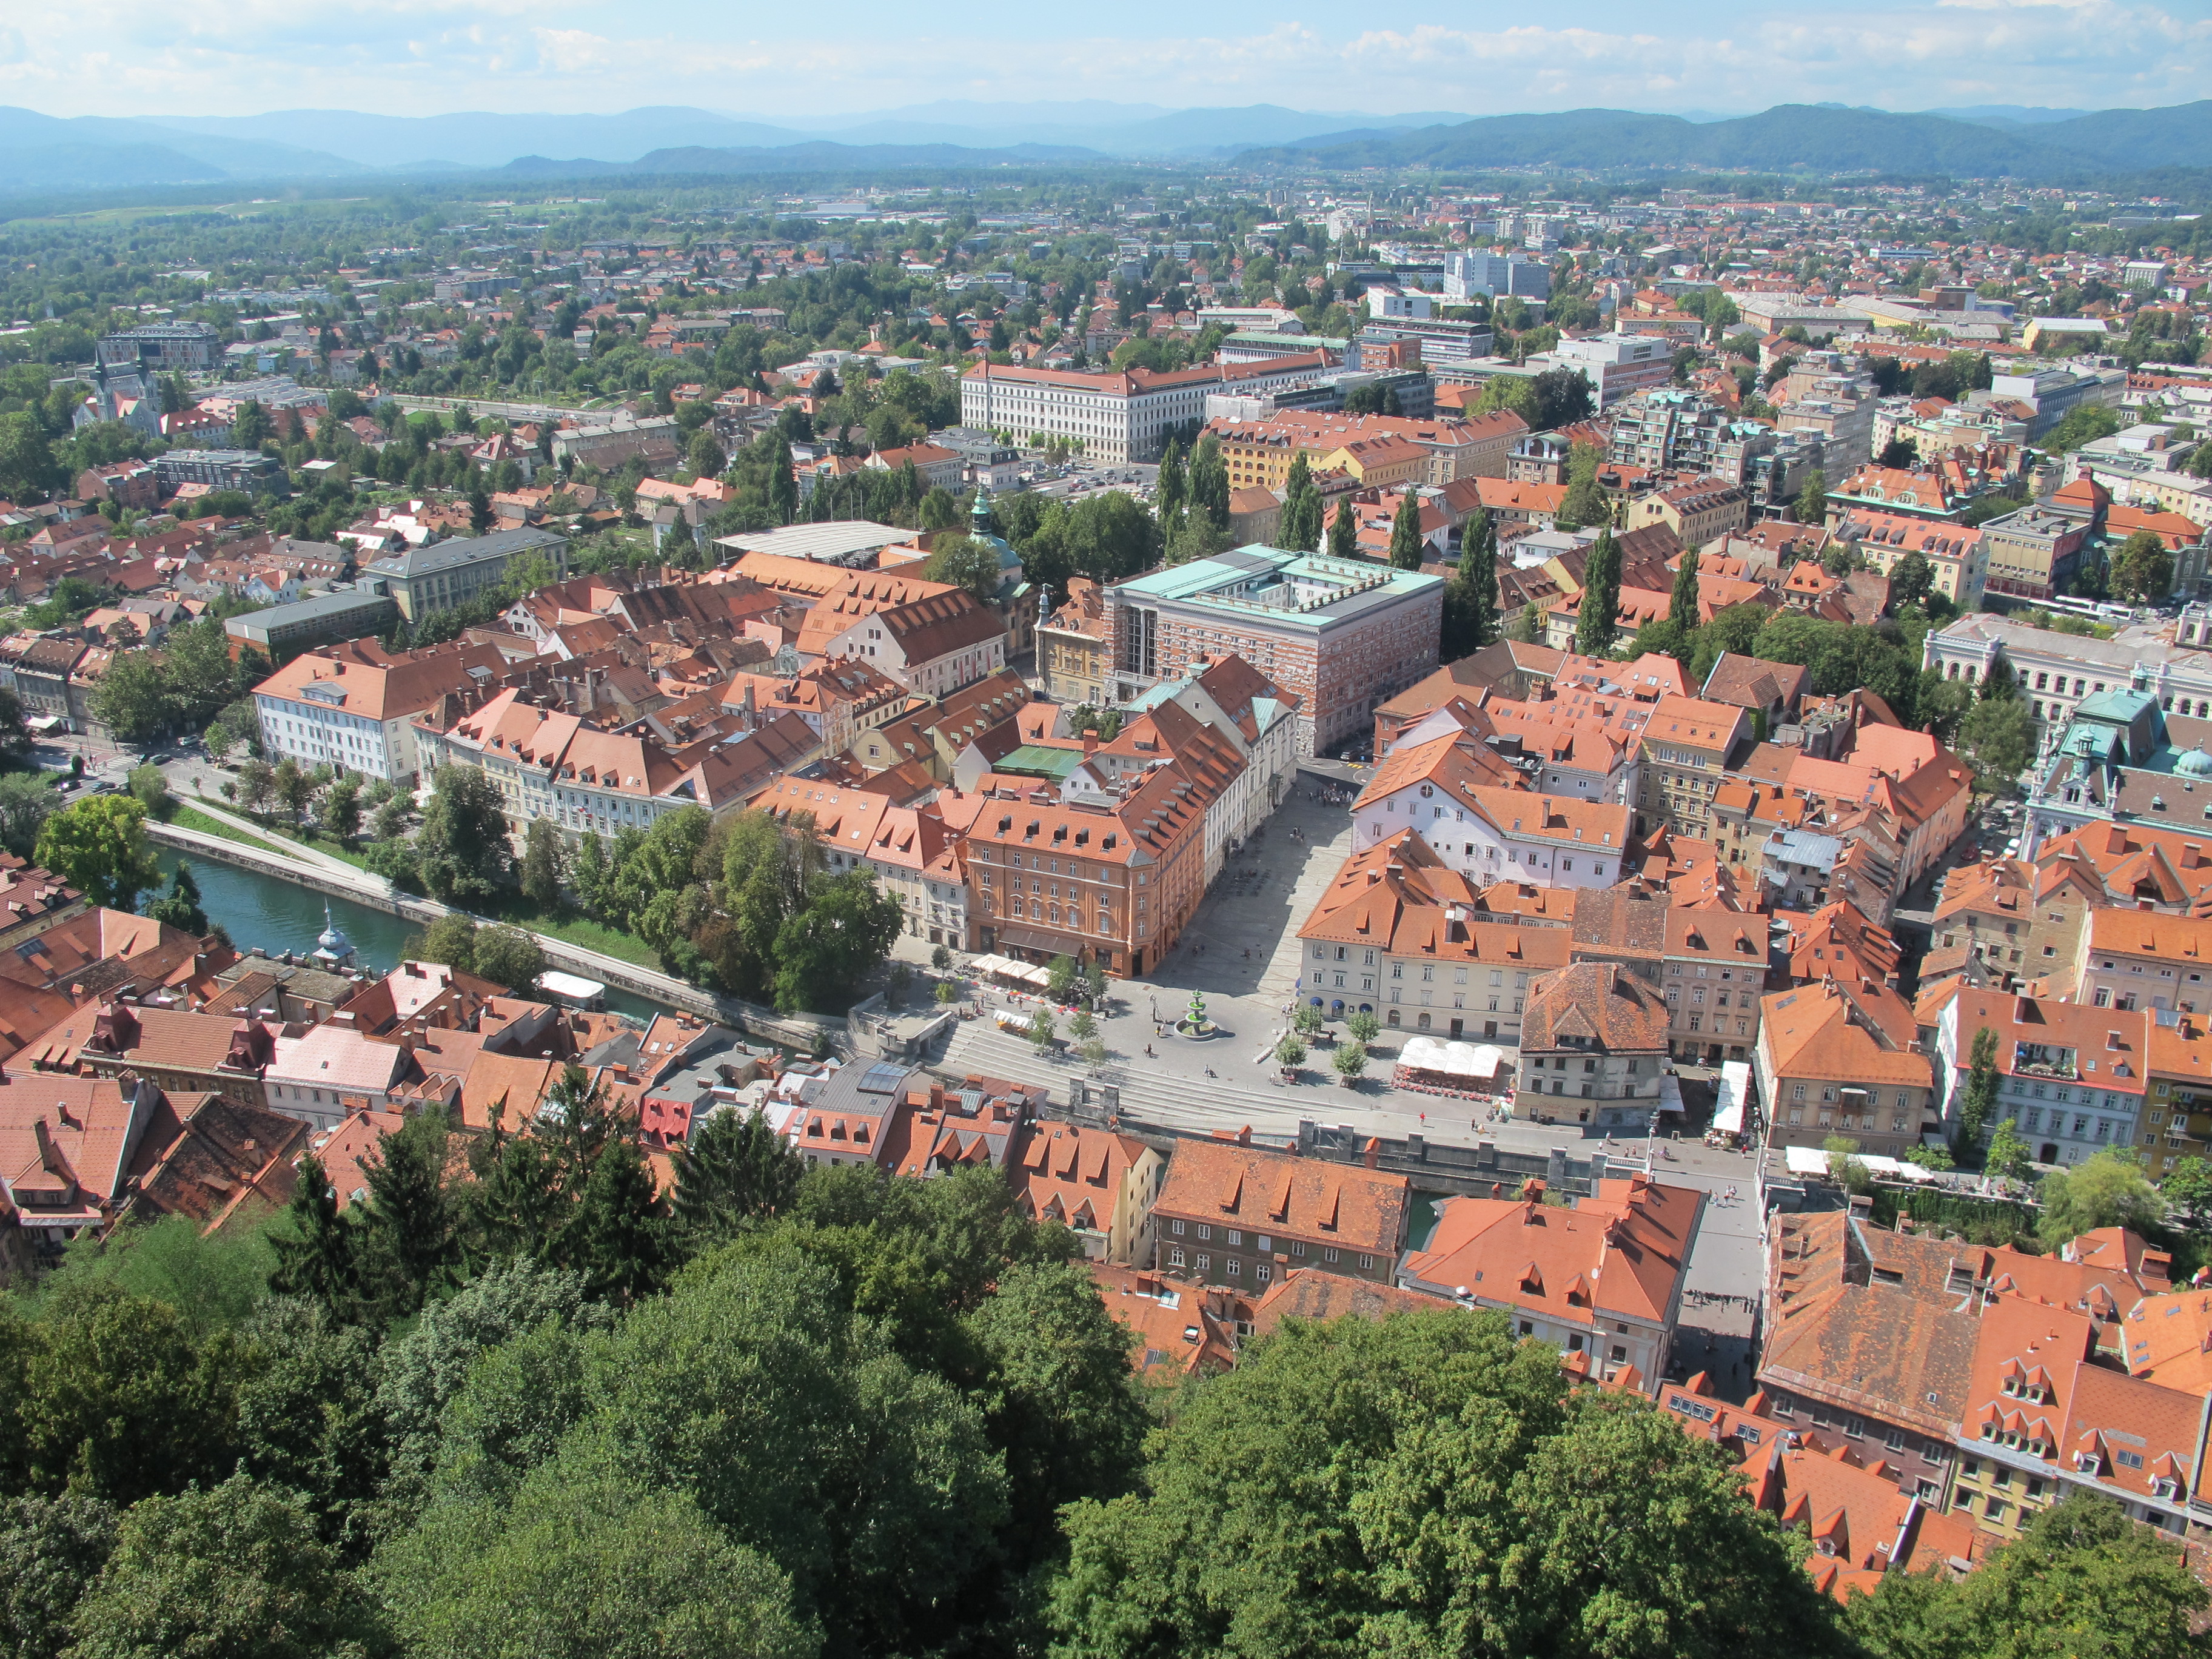 Terra-cotta rooftops, slate green cupolas and river walkways of Ljubljana, framed by the Julian Alps.